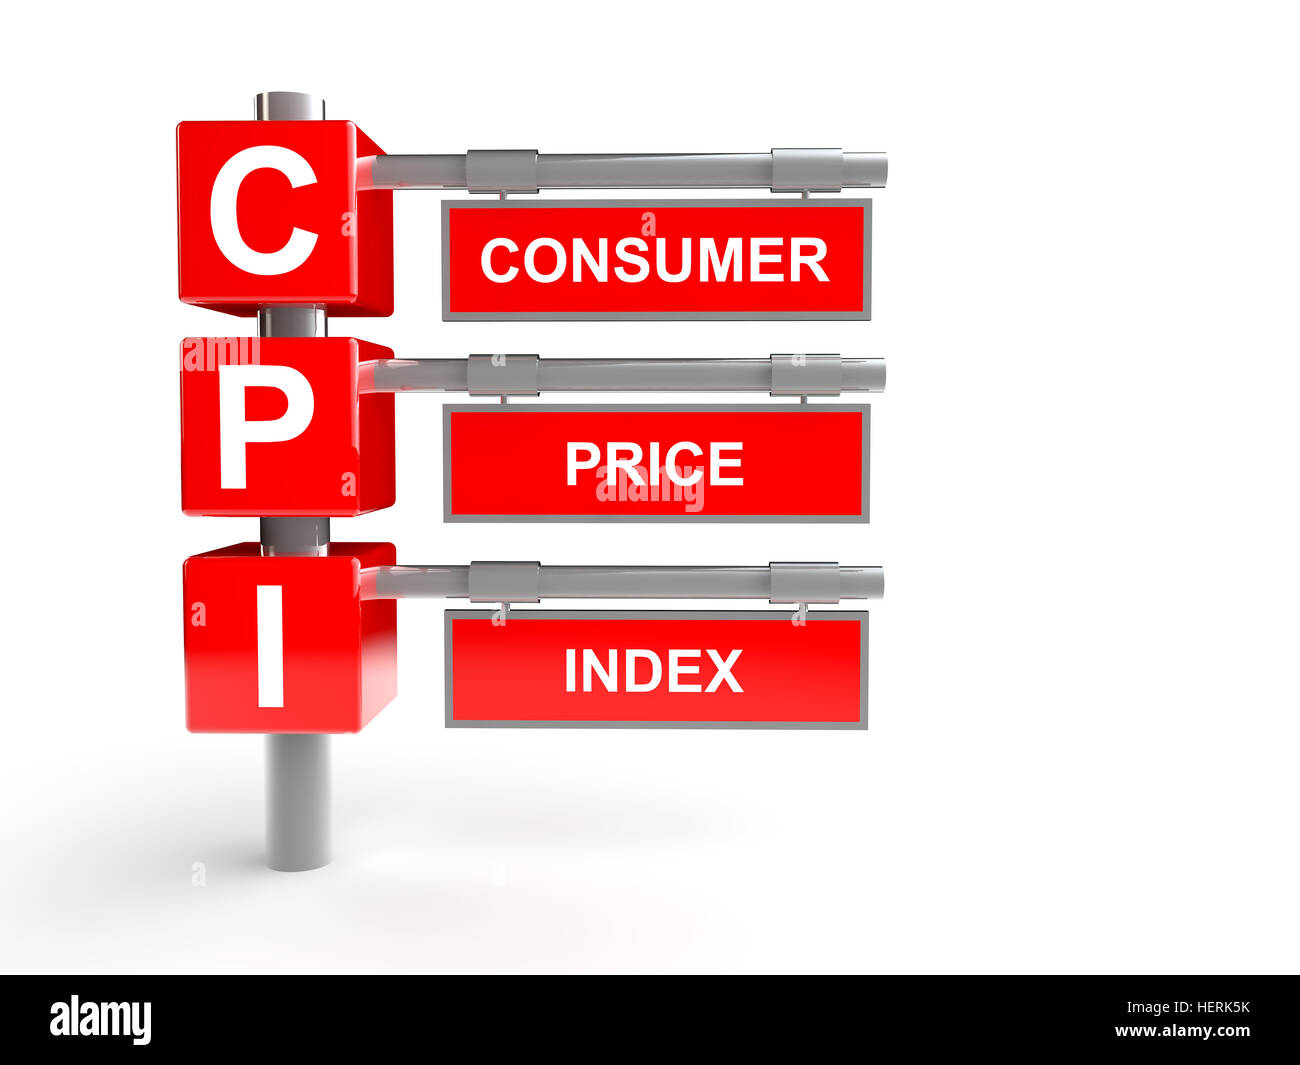 Consumer price index abbreviation Stock Photo